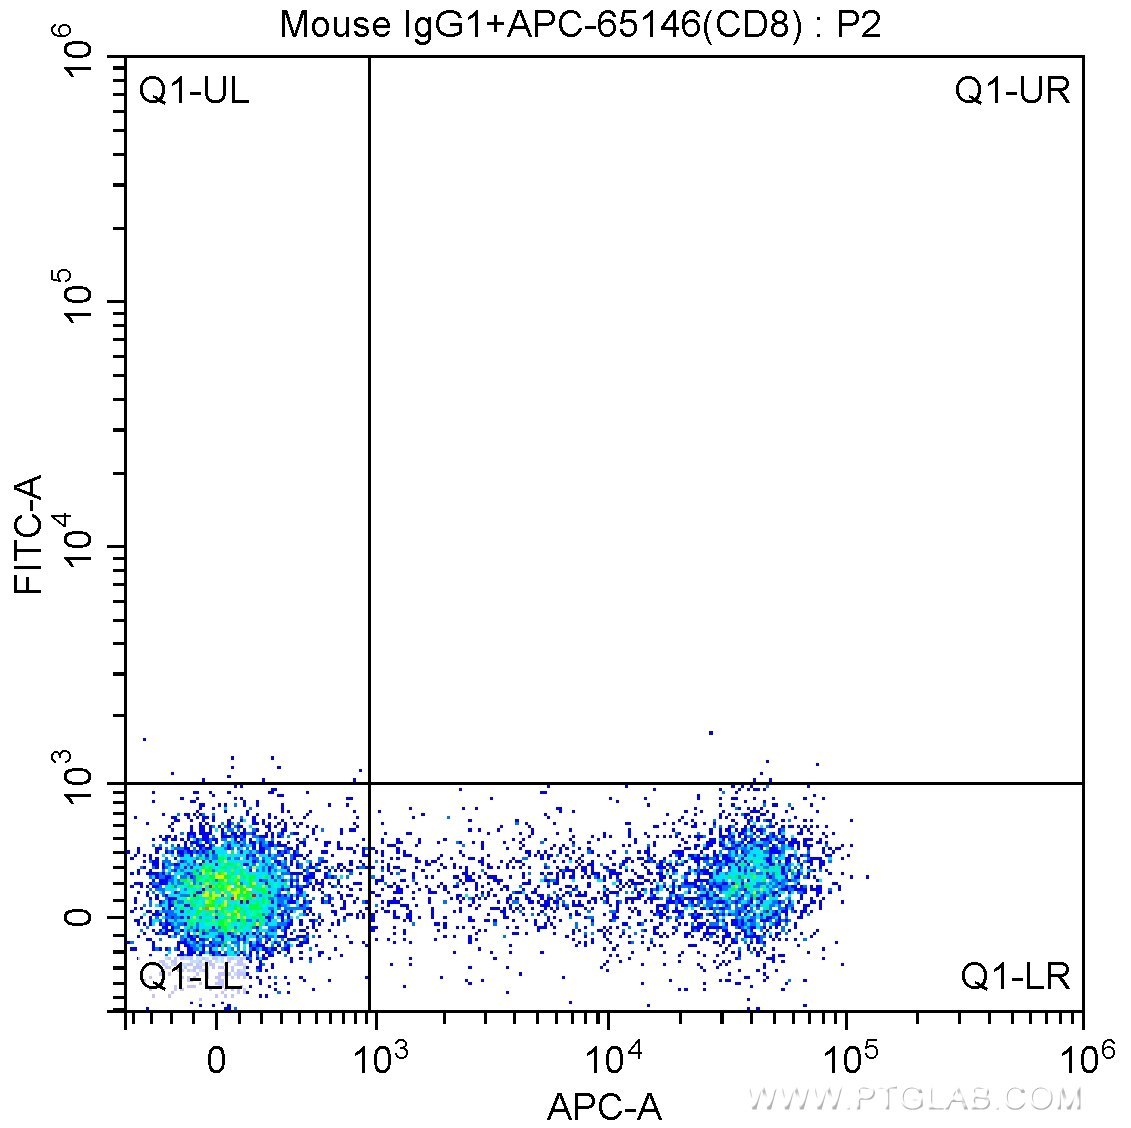 Flow cytometry (FC) experiment of human peripheral blood lymphocytes using Anti-Human CD314 (1D11) (65188-1-Ig)